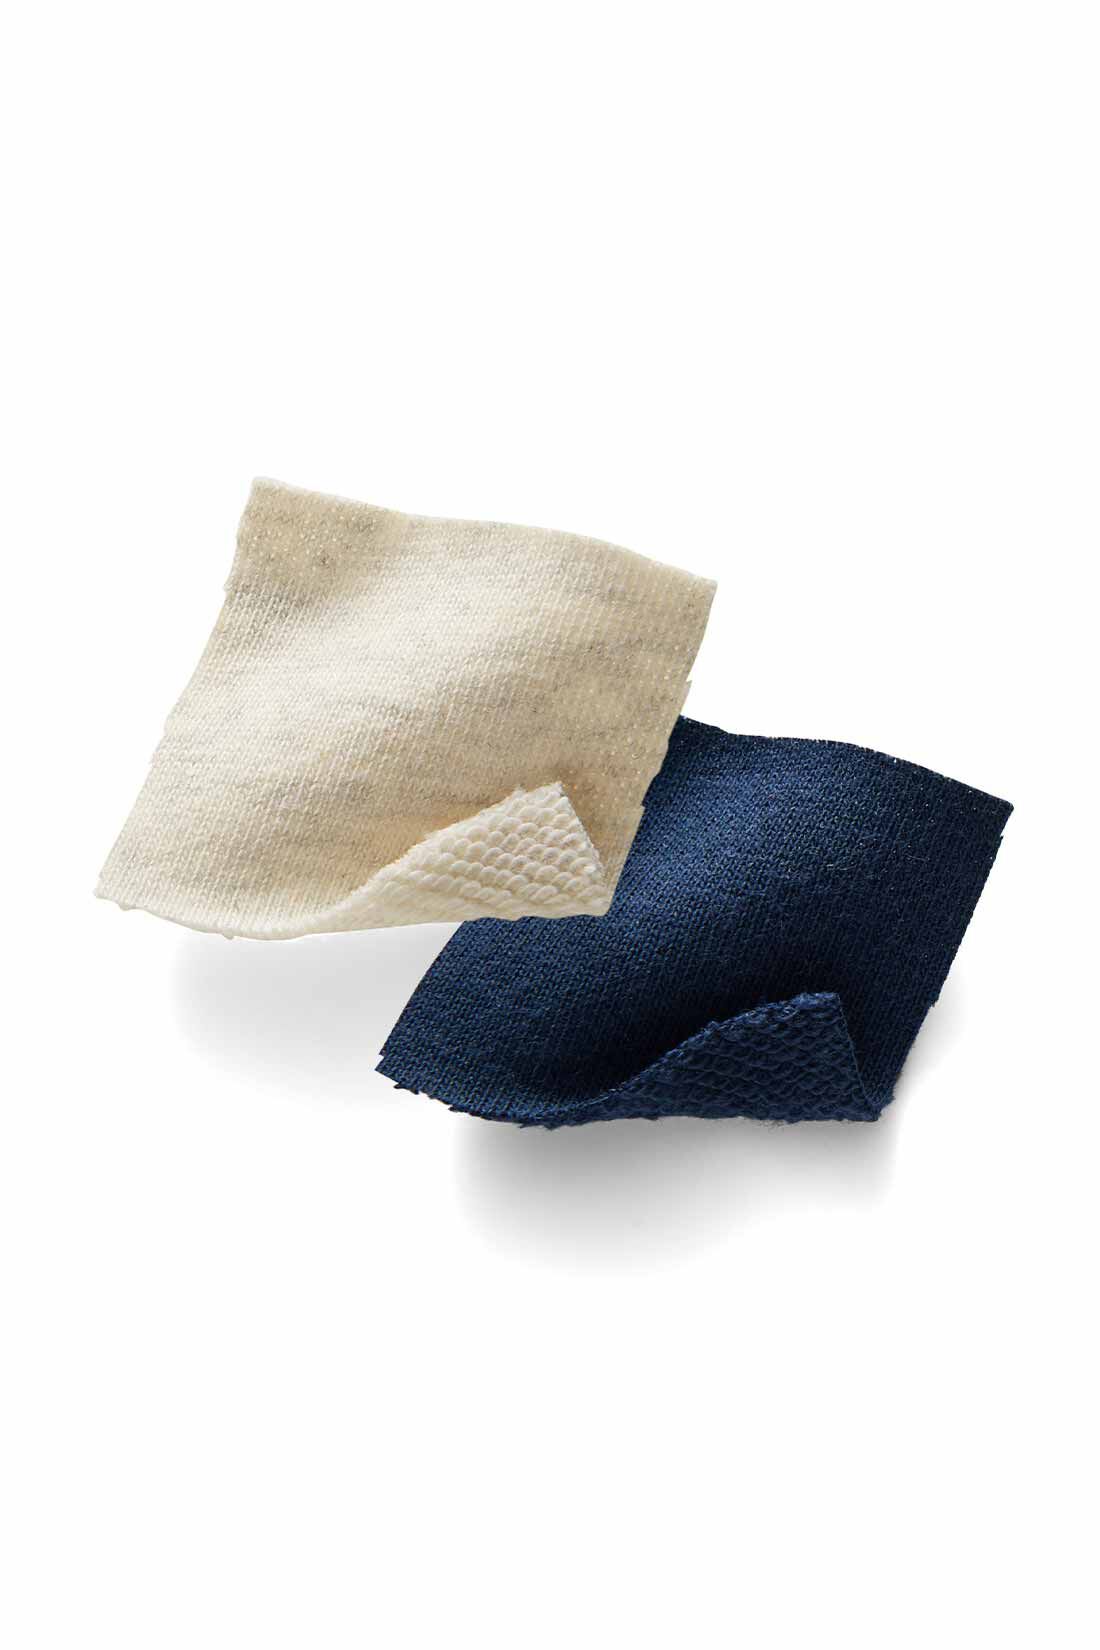 IEDIT|IEDIT[イディット]　ＷＯＯＤＳコラボ　衿付き刺しゅうロゴスウェット〈ネイビー〉|適度な厚みがあり、からだのラインを拾いにくい綿混の裏毛スウェット素材。